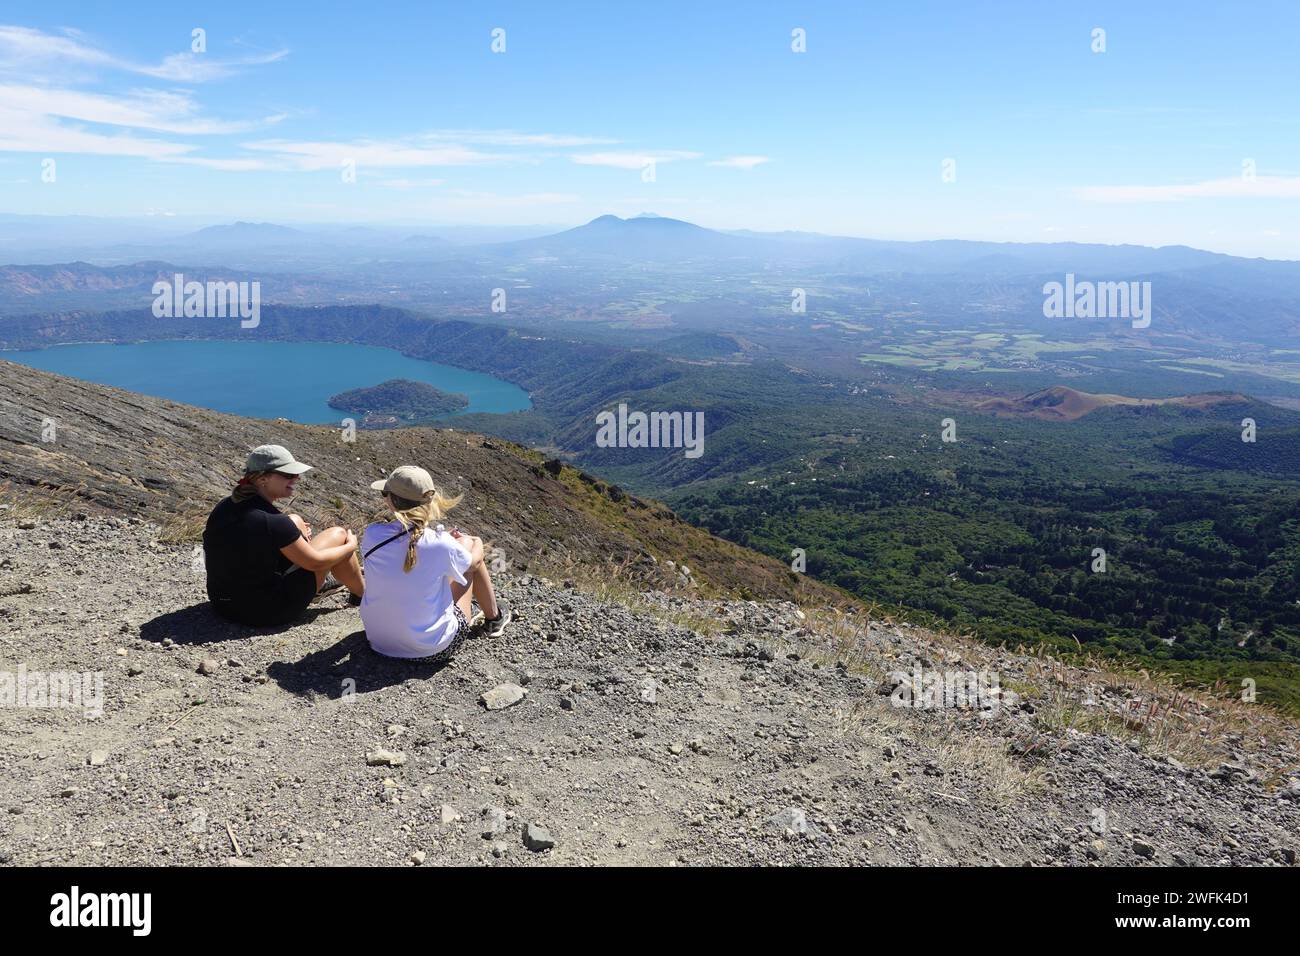 Tourists enjoying views from summit of Santa Ana volcano, El Salvador, Central America Stock Photo